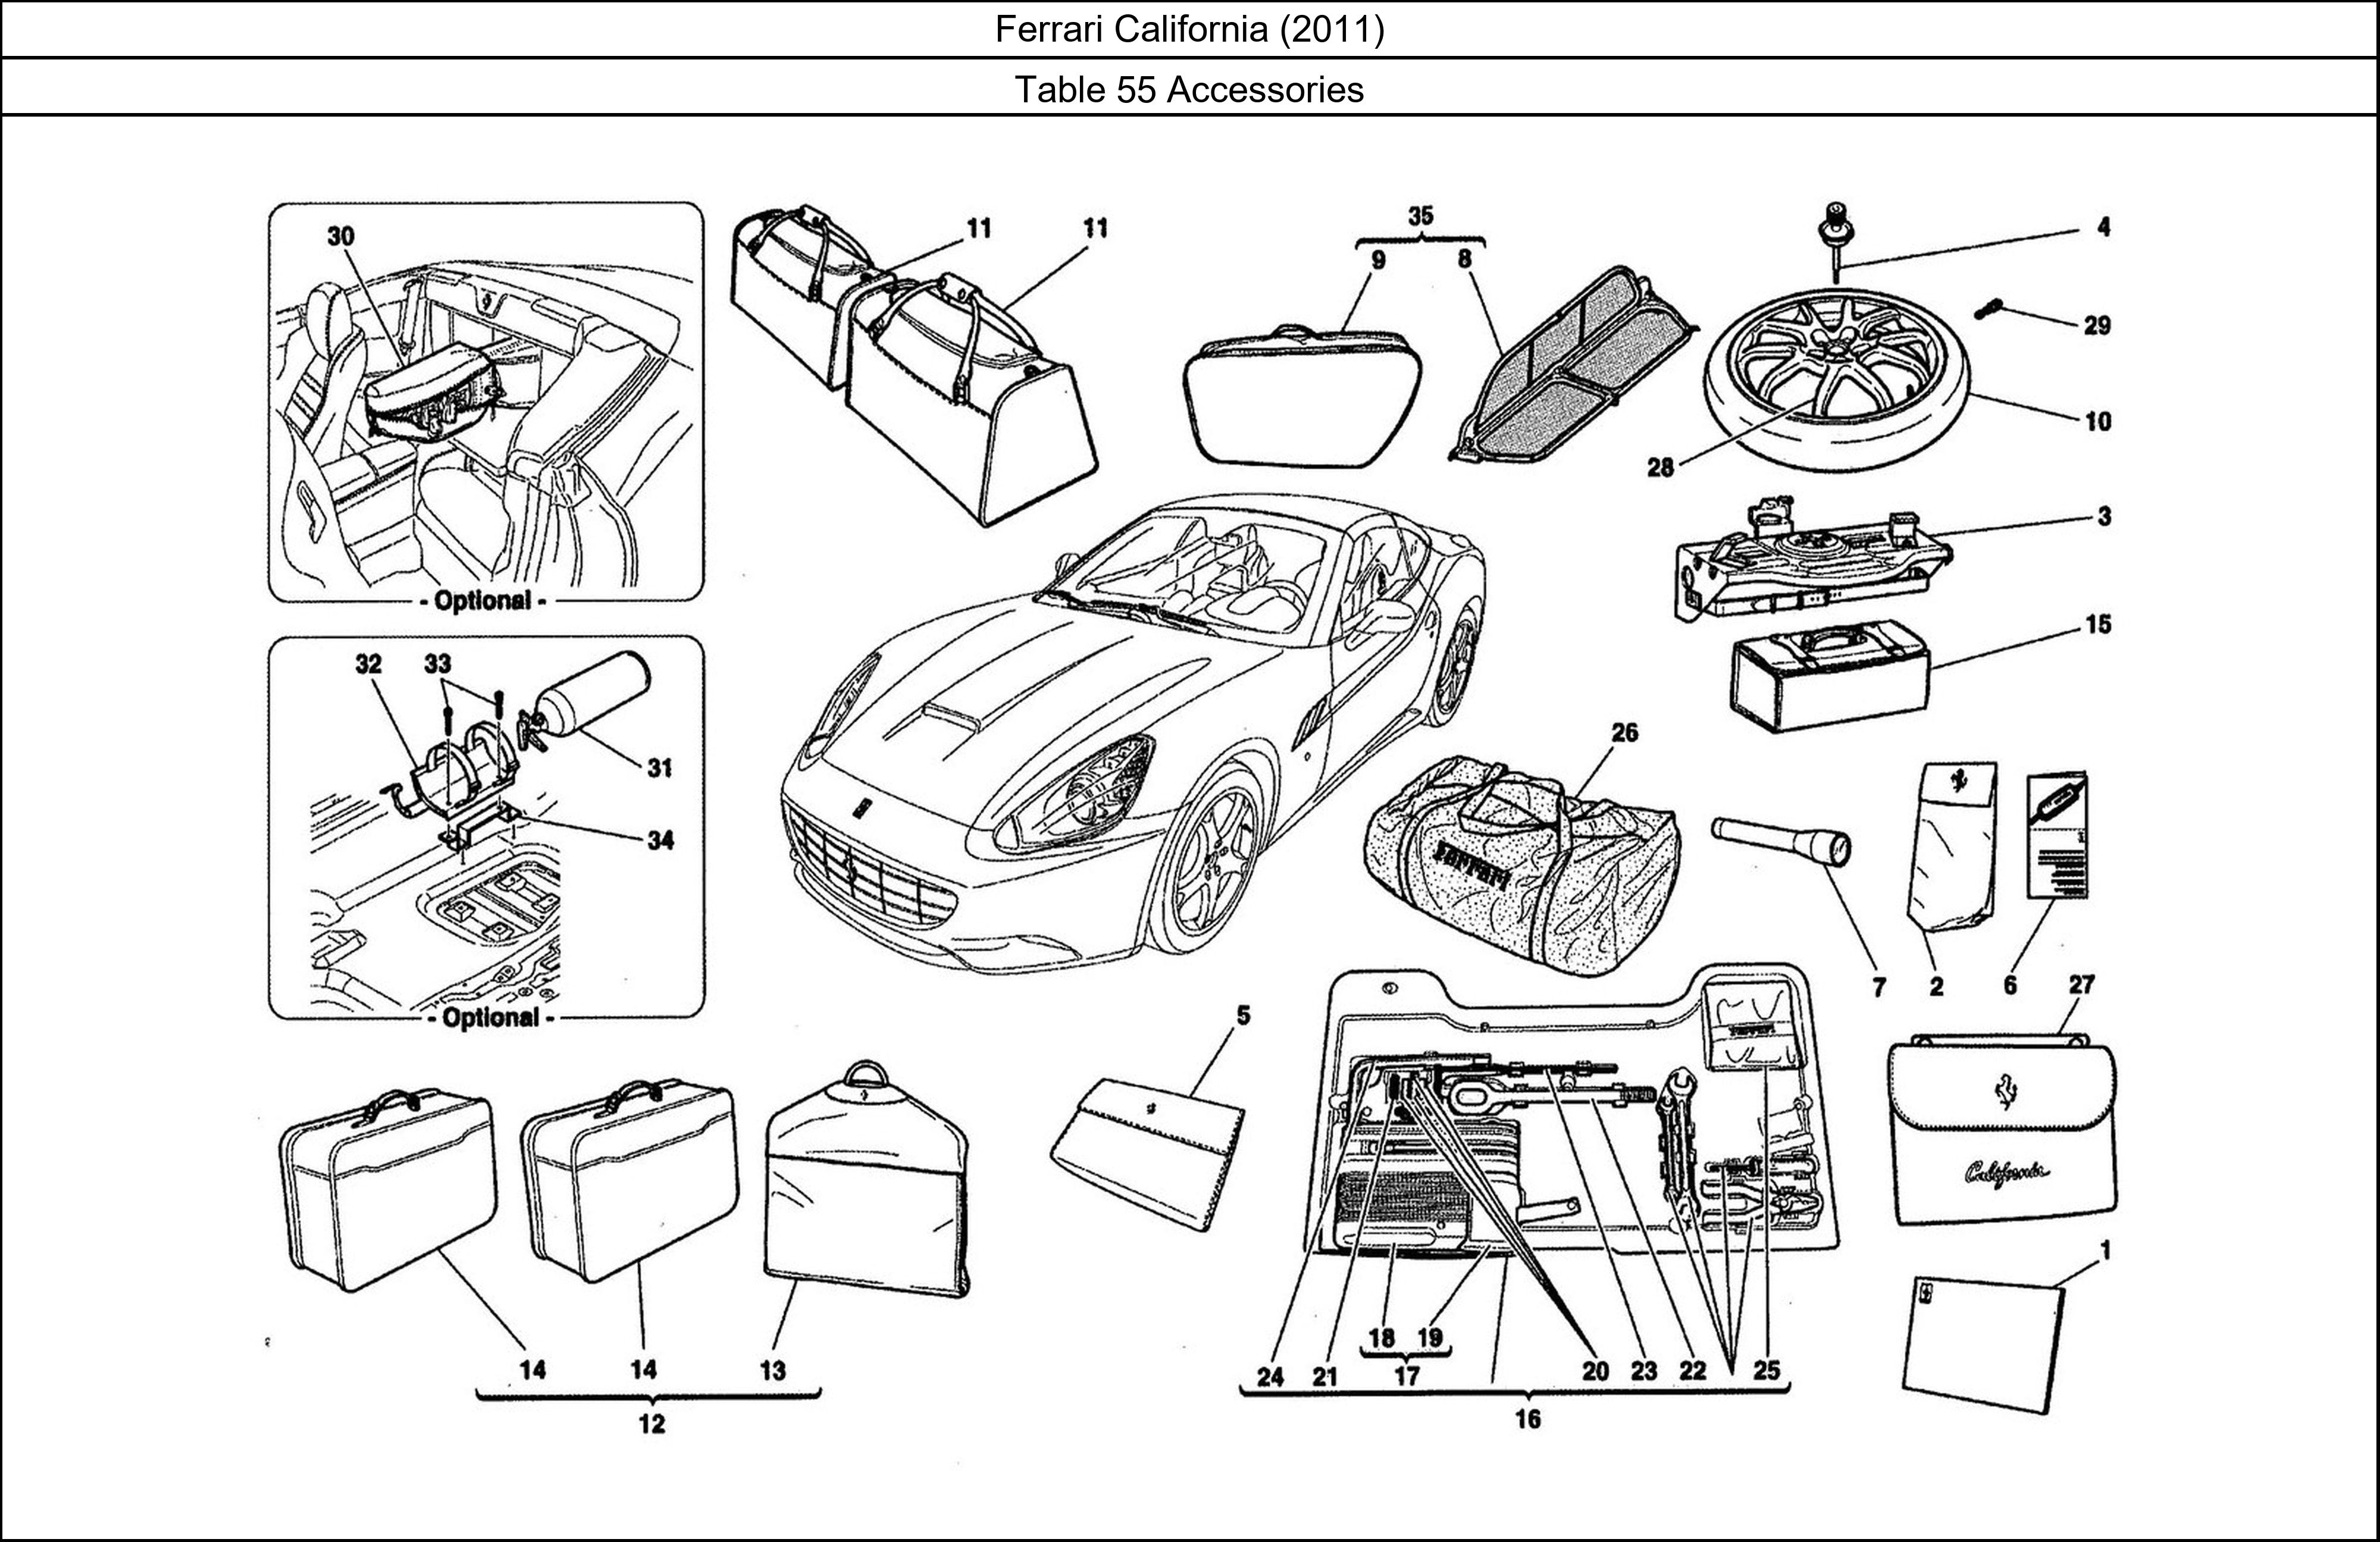 Ferrari Parts Ferrari California (2011) Table 55 Accessories